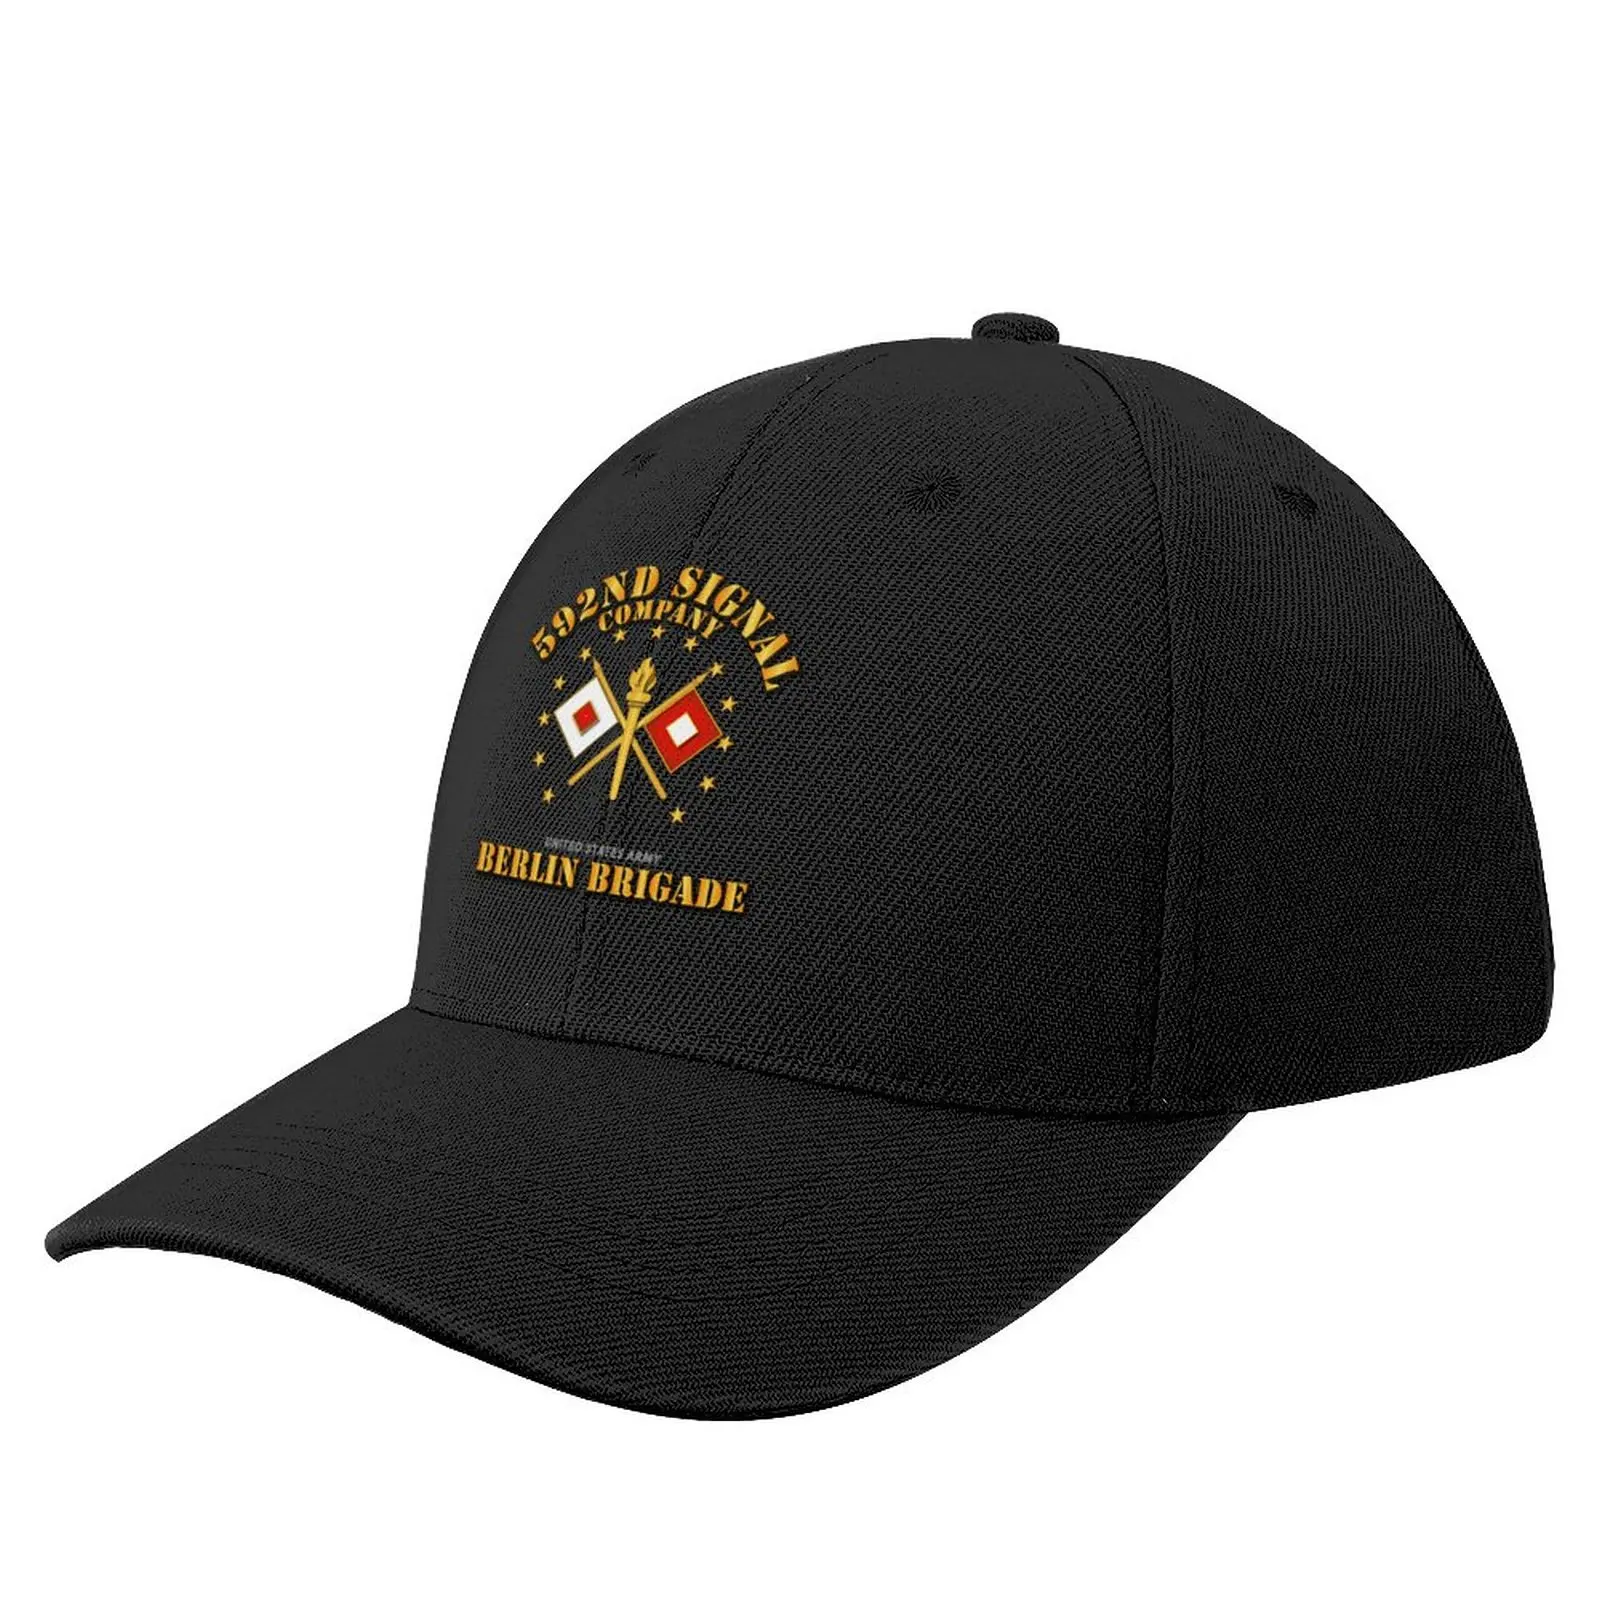 

Army - 592d Signal Company - Berlin Brigade Baseball Cap Golf Wear Snapback Cap Hip Hop Fishing Caps Mens Hat Women's